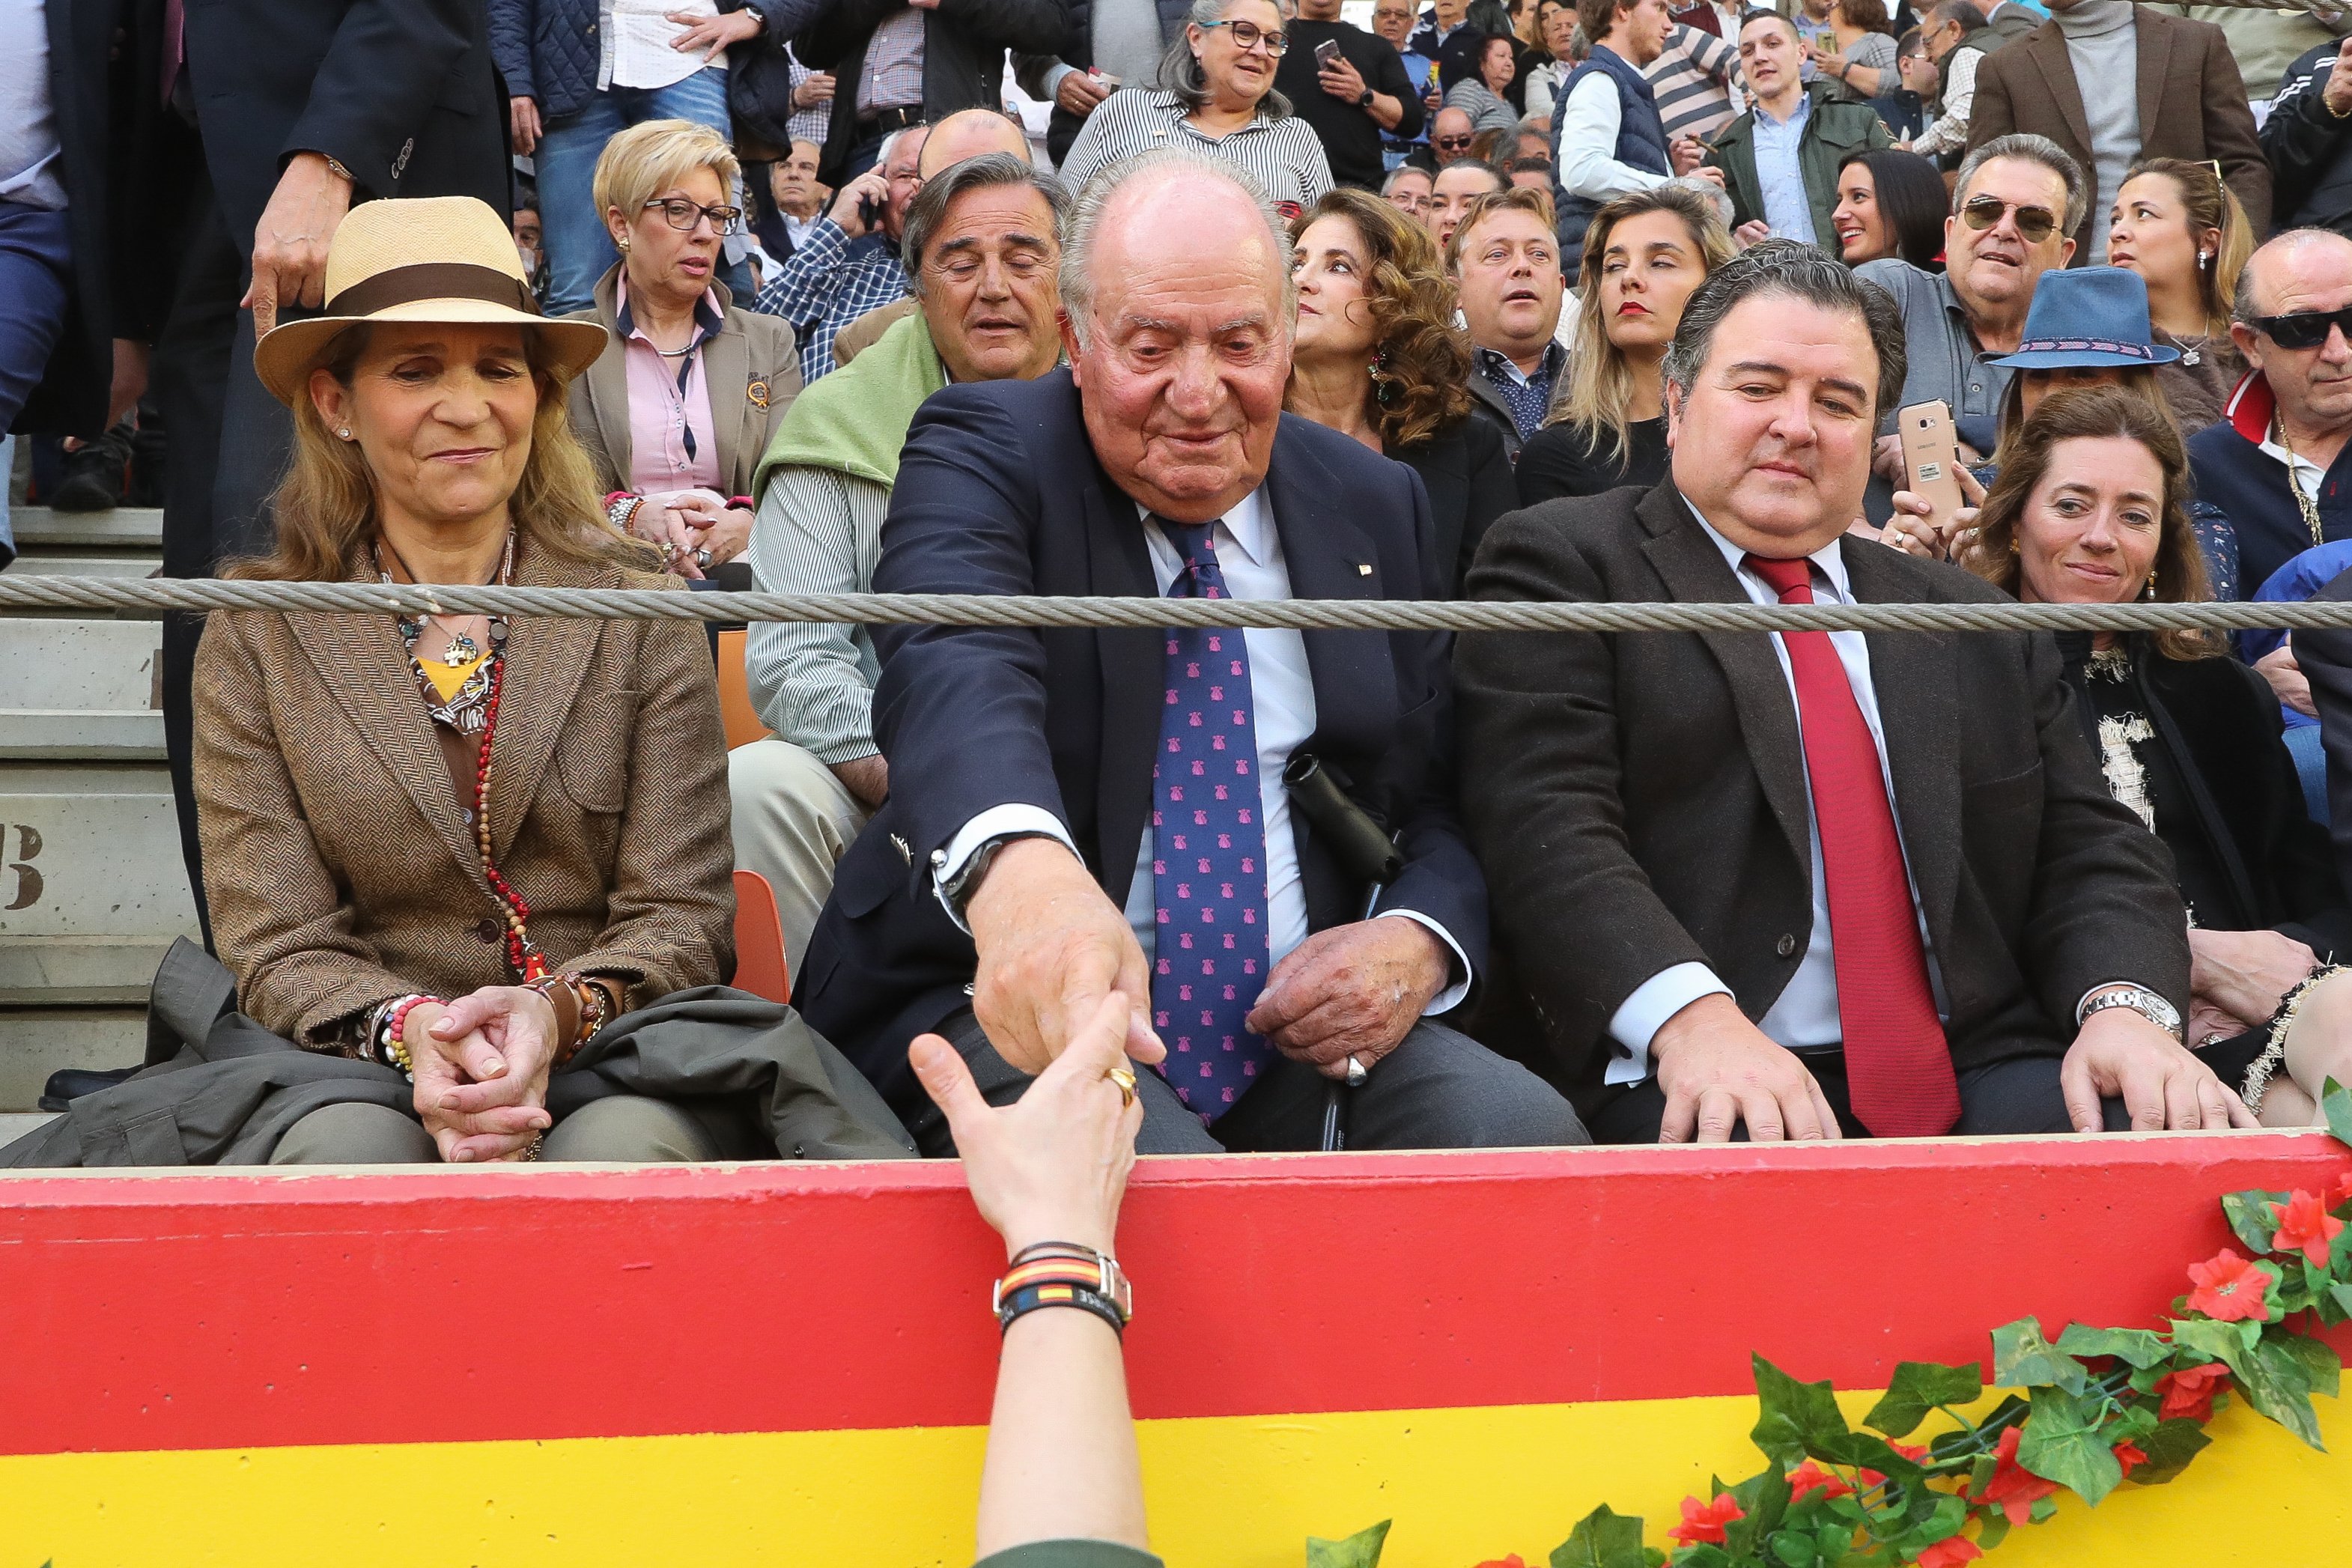 Spanish monarchy scandal reaches Belgium: "Shock in Spain"